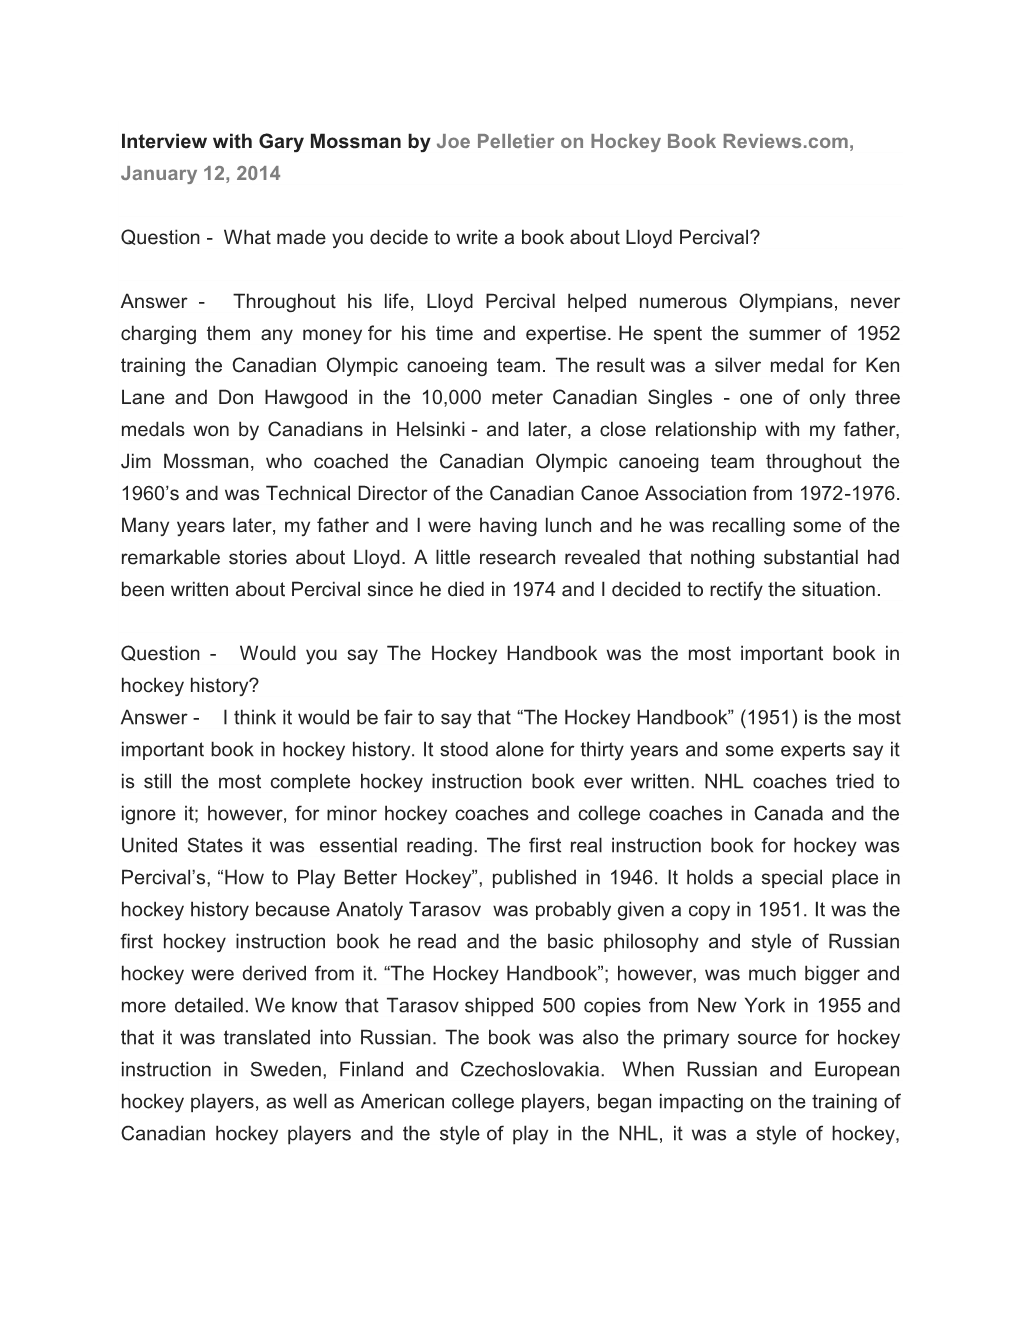 Interview with Gary Mossman by Joe Pelletier on Hockey Book Reviews.Com, January 12, 2014